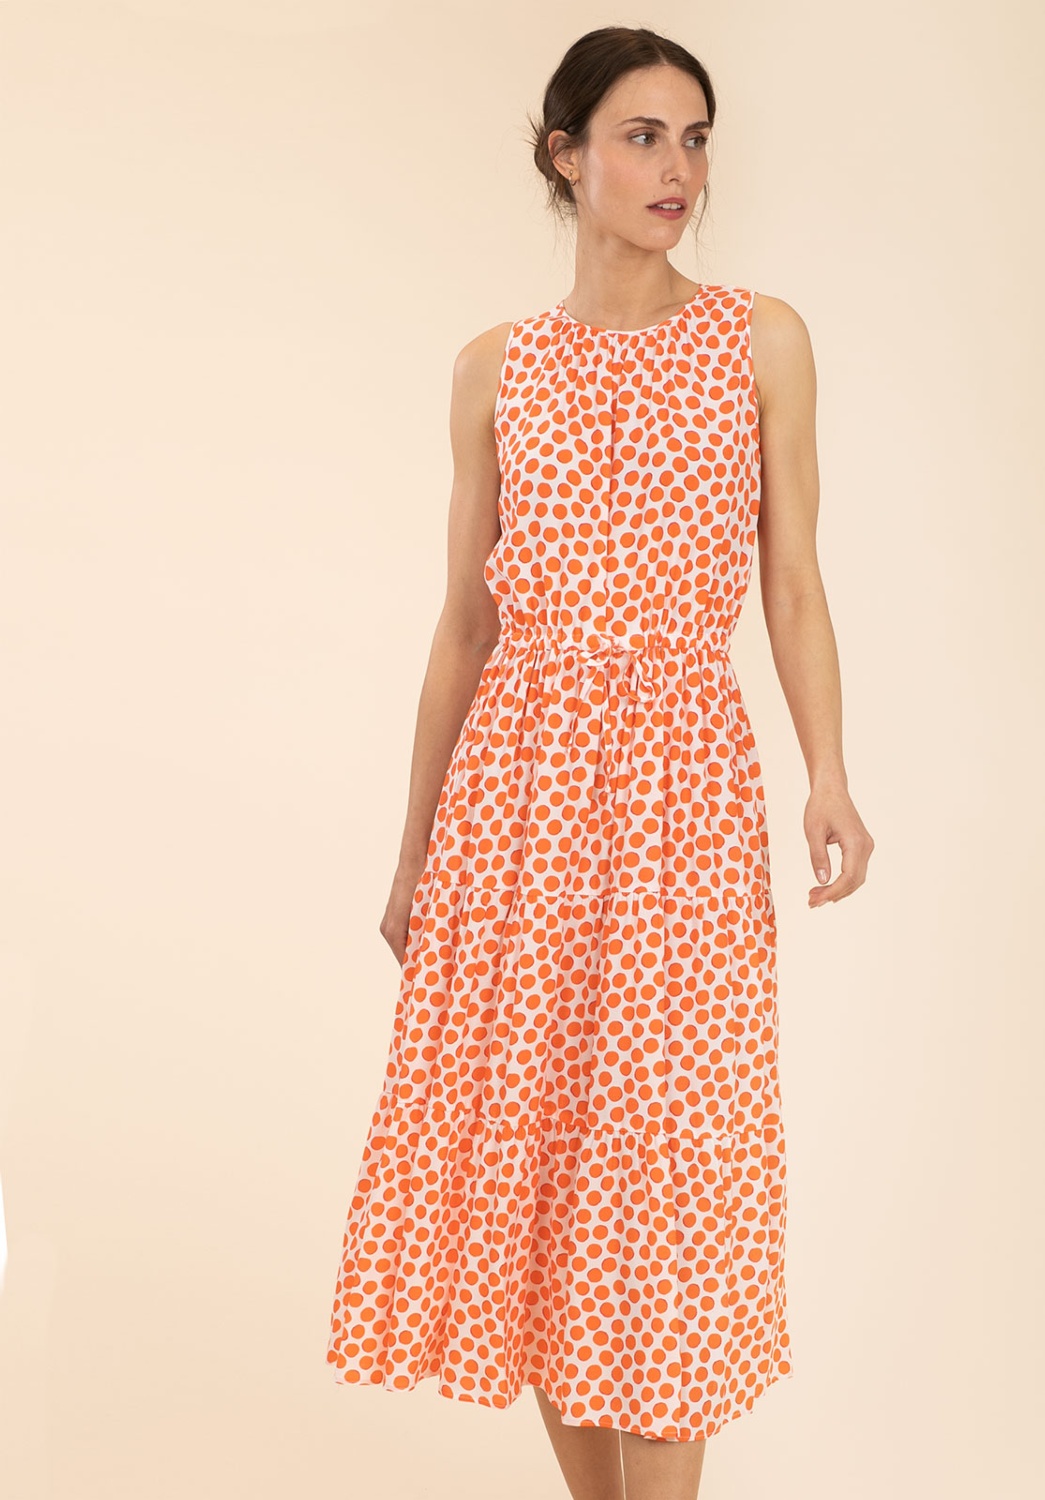 Orange Polka Dot Dress 1